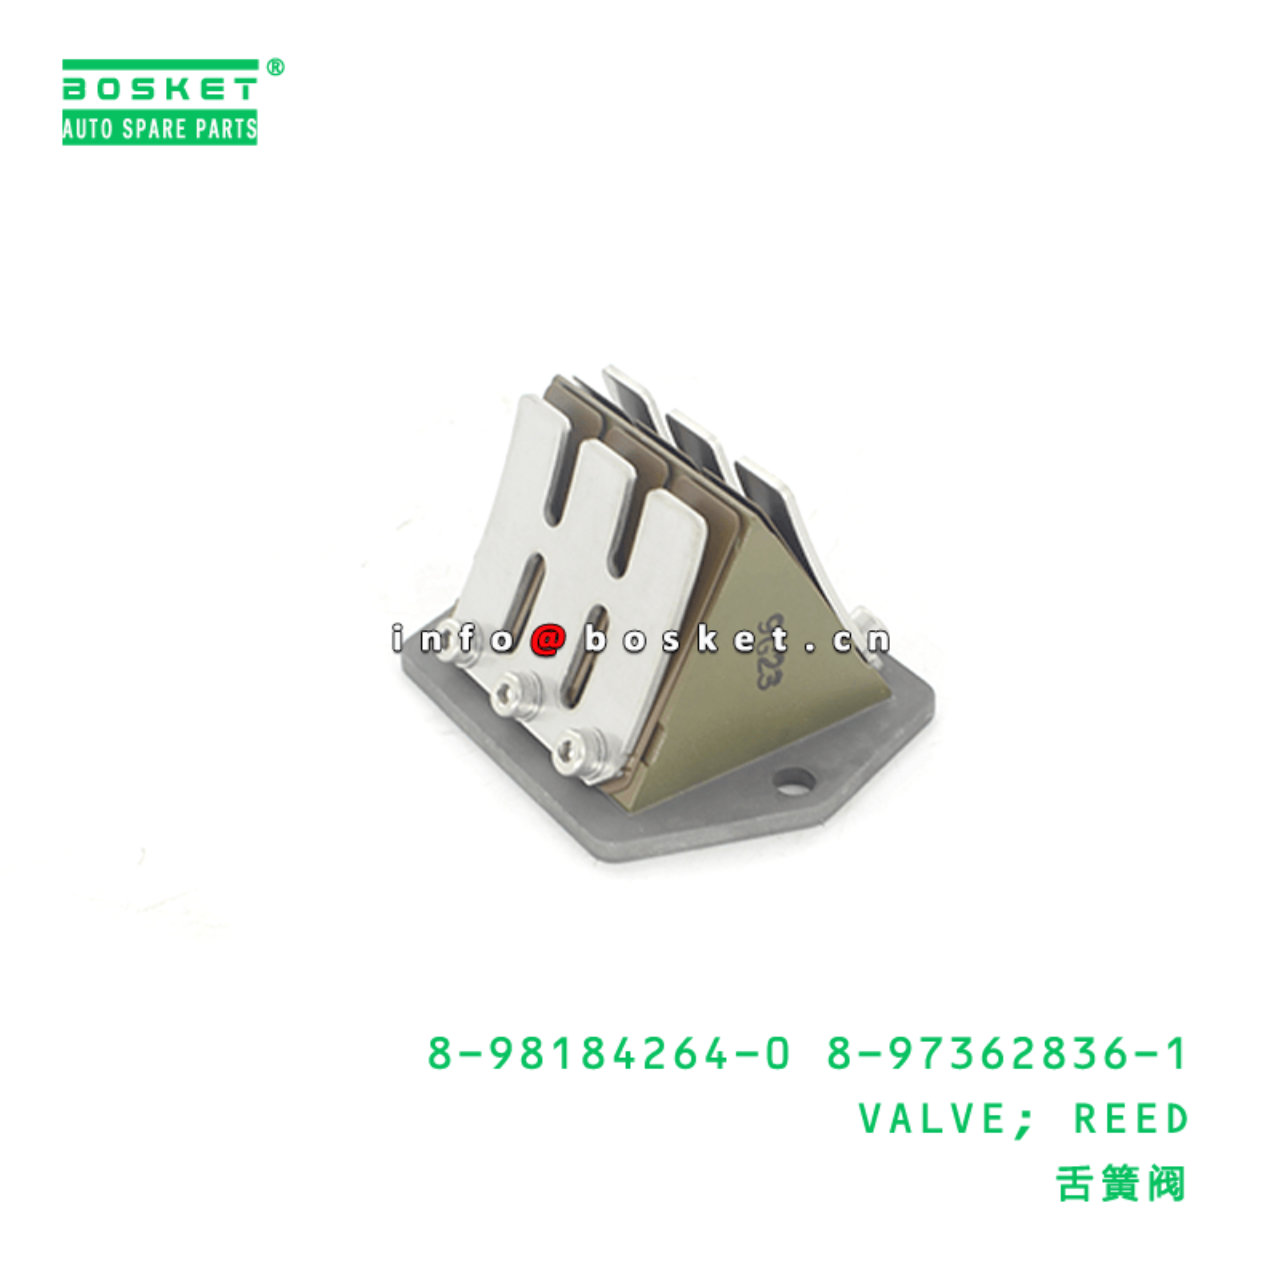 8-97357027-0 Antenna 8973570270 Suitable for ISUZU D-MAX - For ISUZU D-MAX  Parts - BOSKET INDUSTRIAL LTD